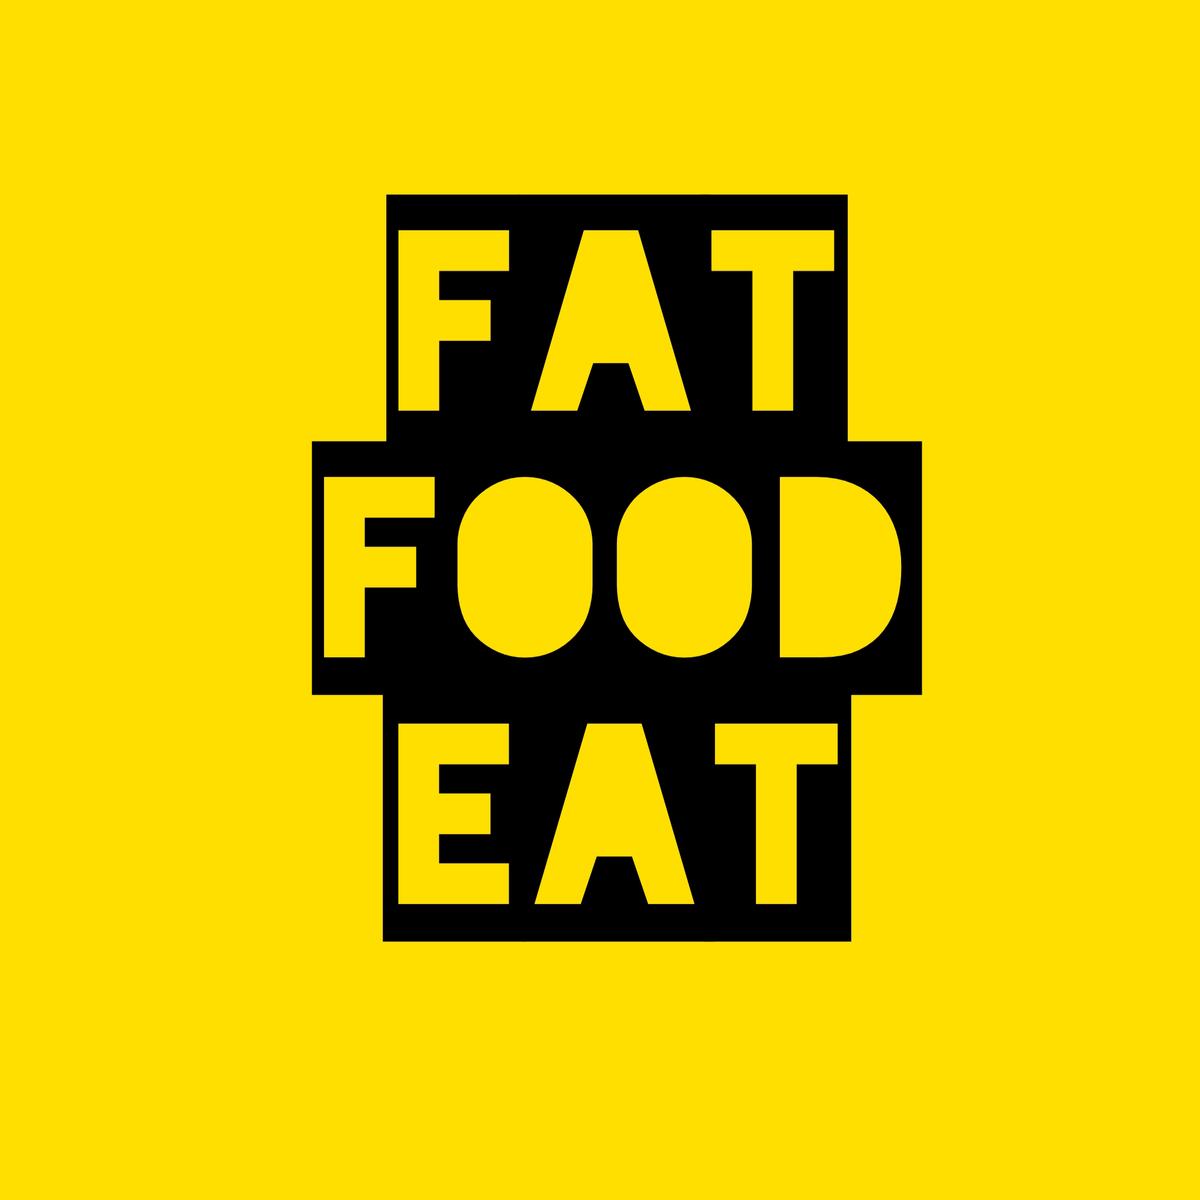 Fat_Food_Eat